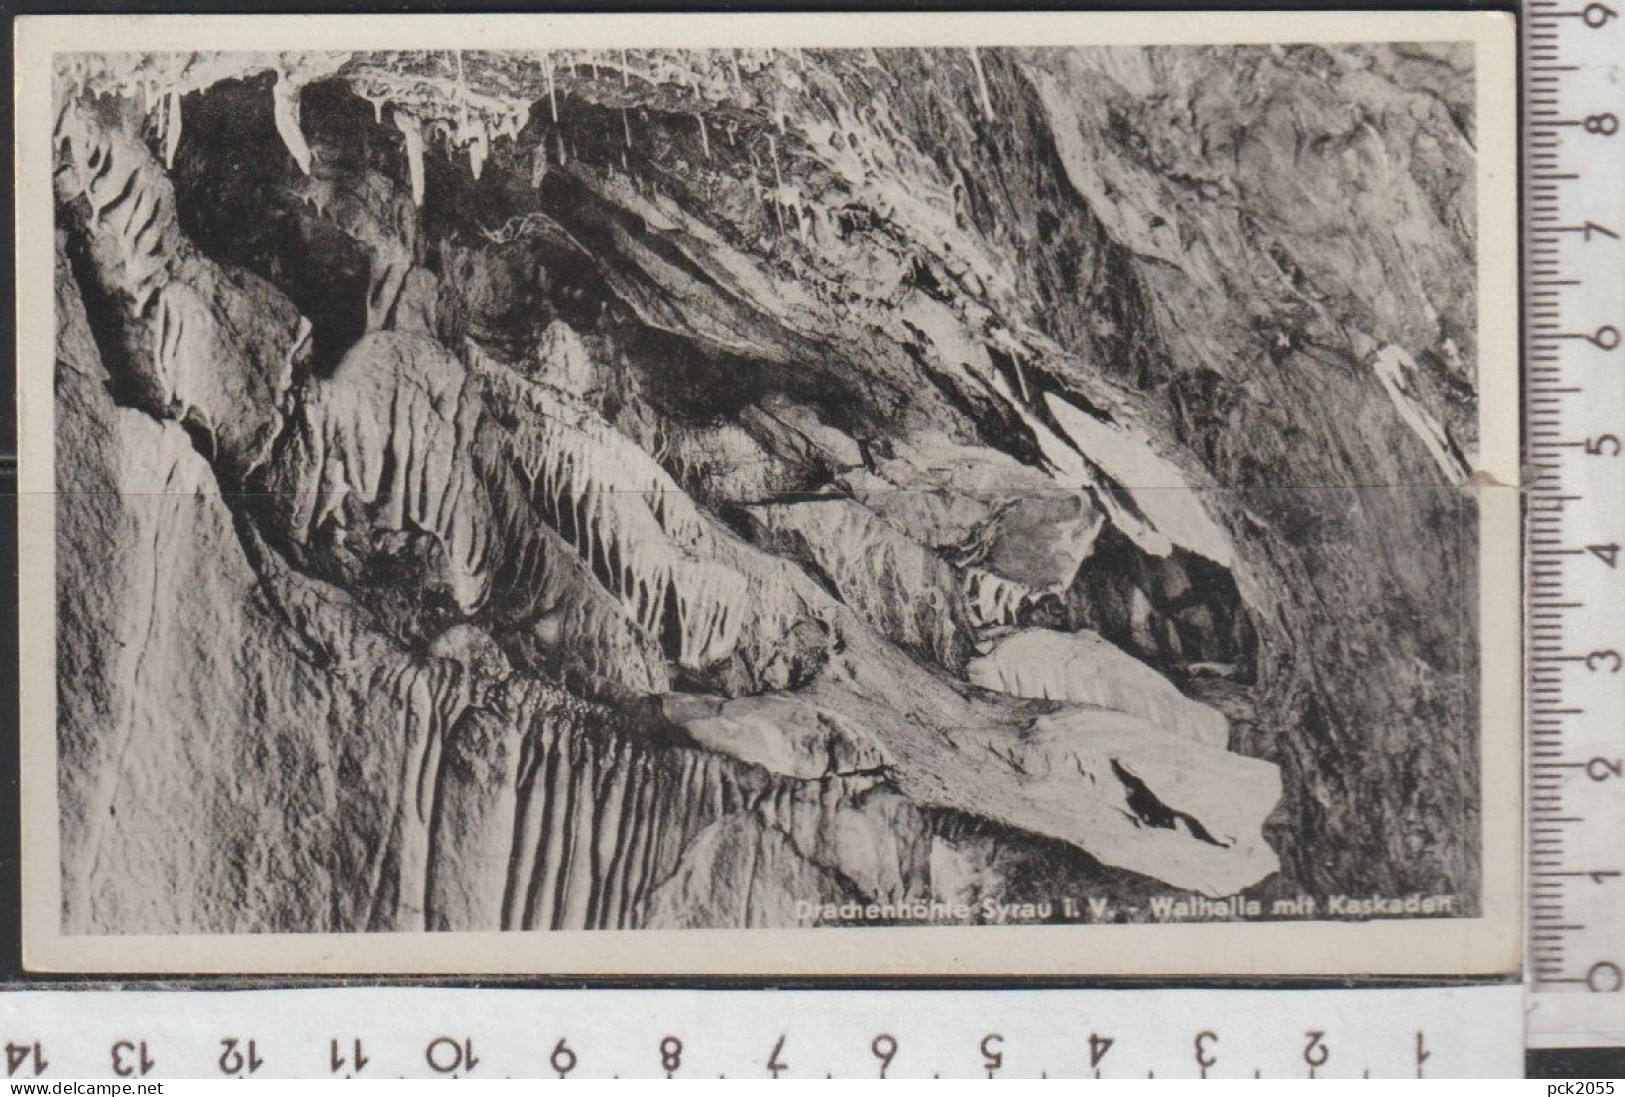 SYRAU - Drachenhöhle I. V. - Walhalla Mit Kaskaden , Nicht Gelaufen  ( AK 4599) Günstige Versandkosten - Syrau (Vogtland)